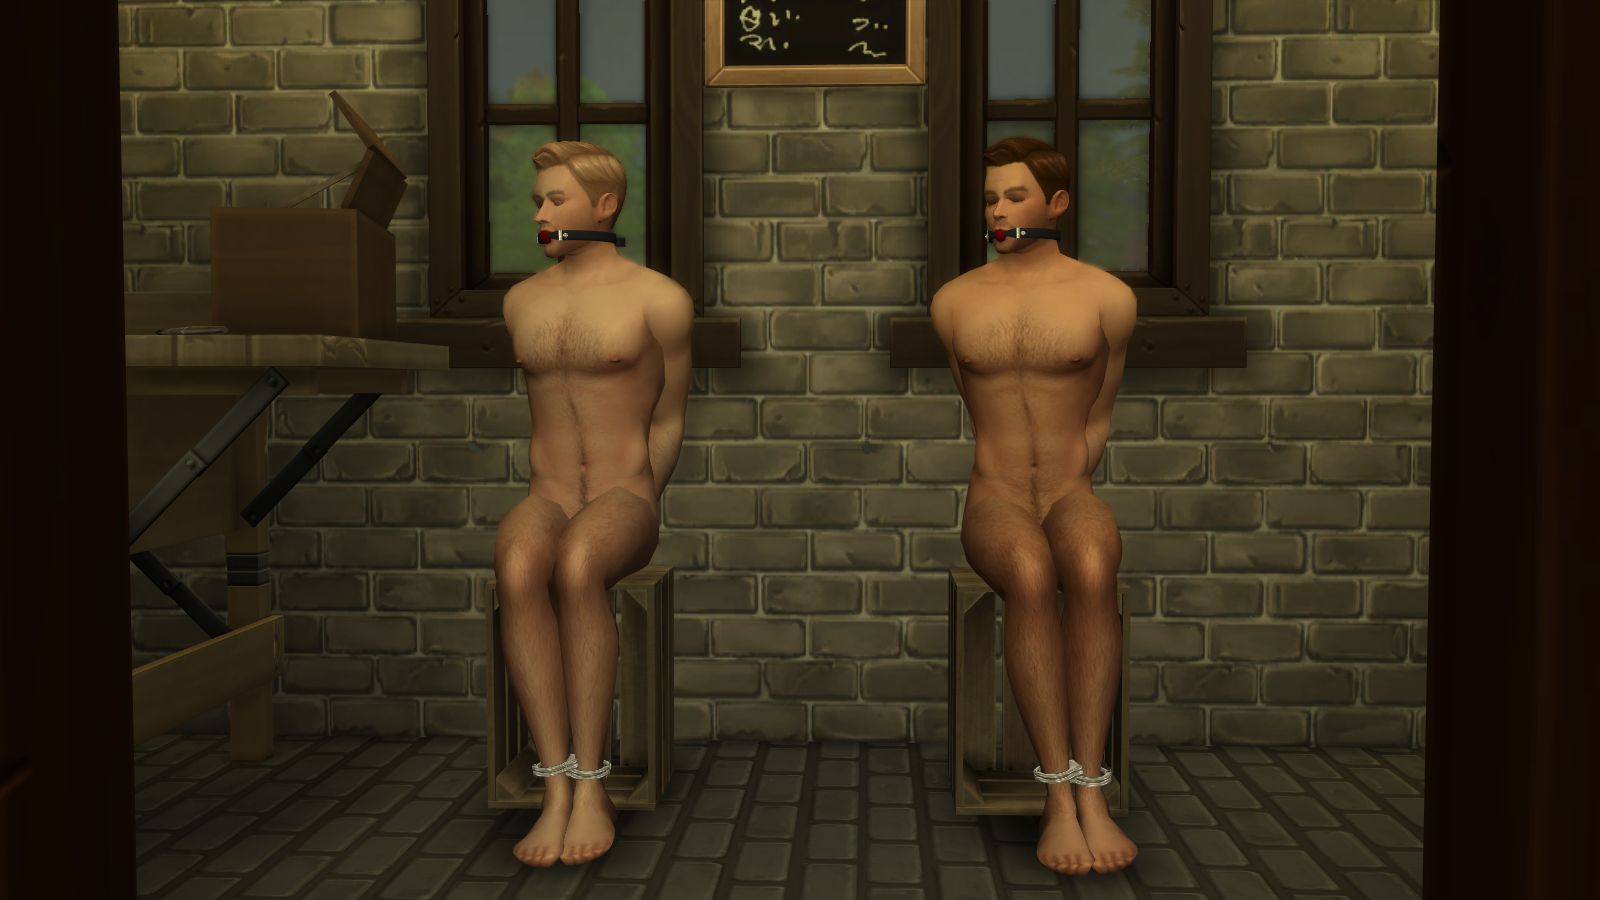 Sims 4 sex dungeon mod